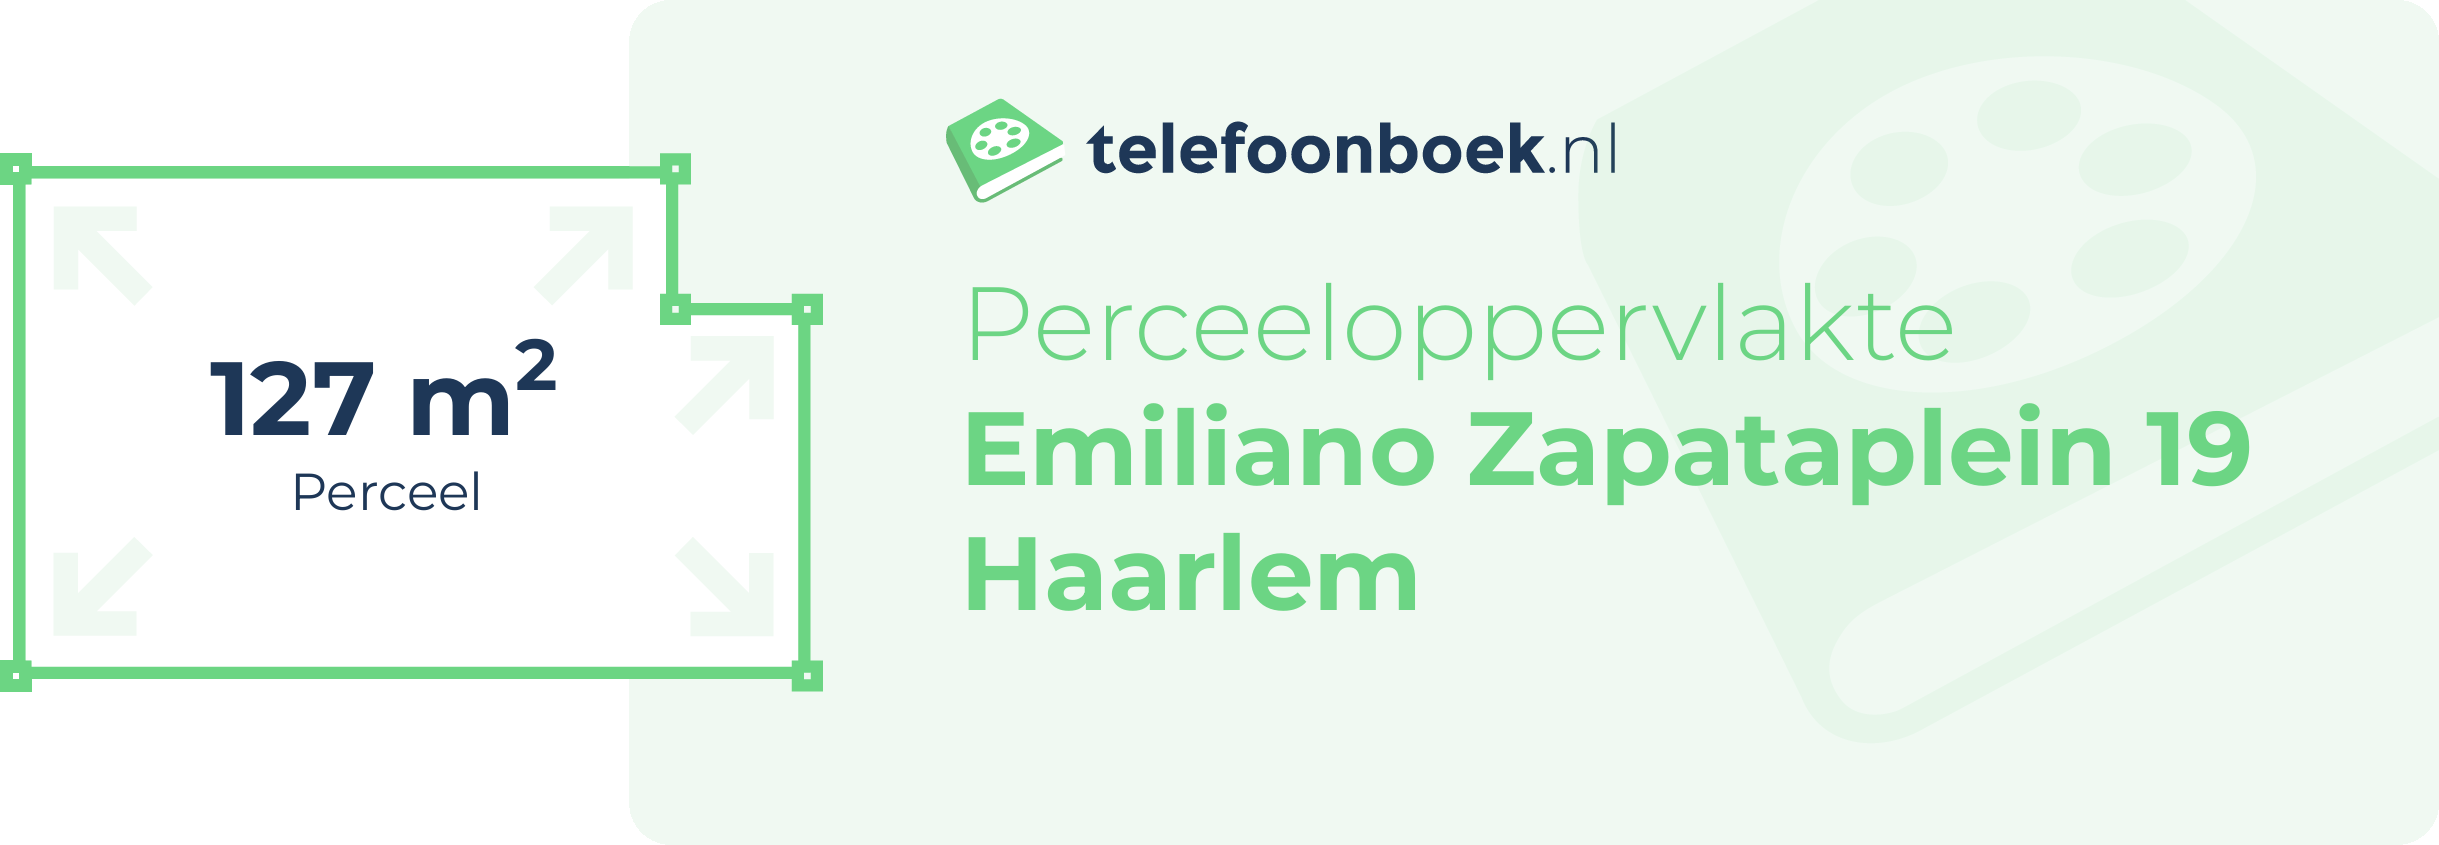 Perceeloppervlakte Emiliano Zapataplein 19 Haarlem